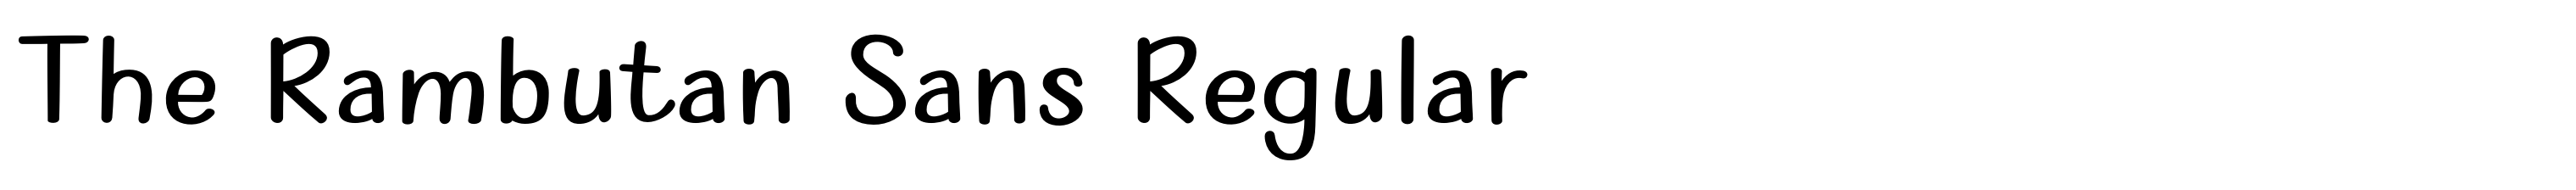 The Rambutan Sans Regular